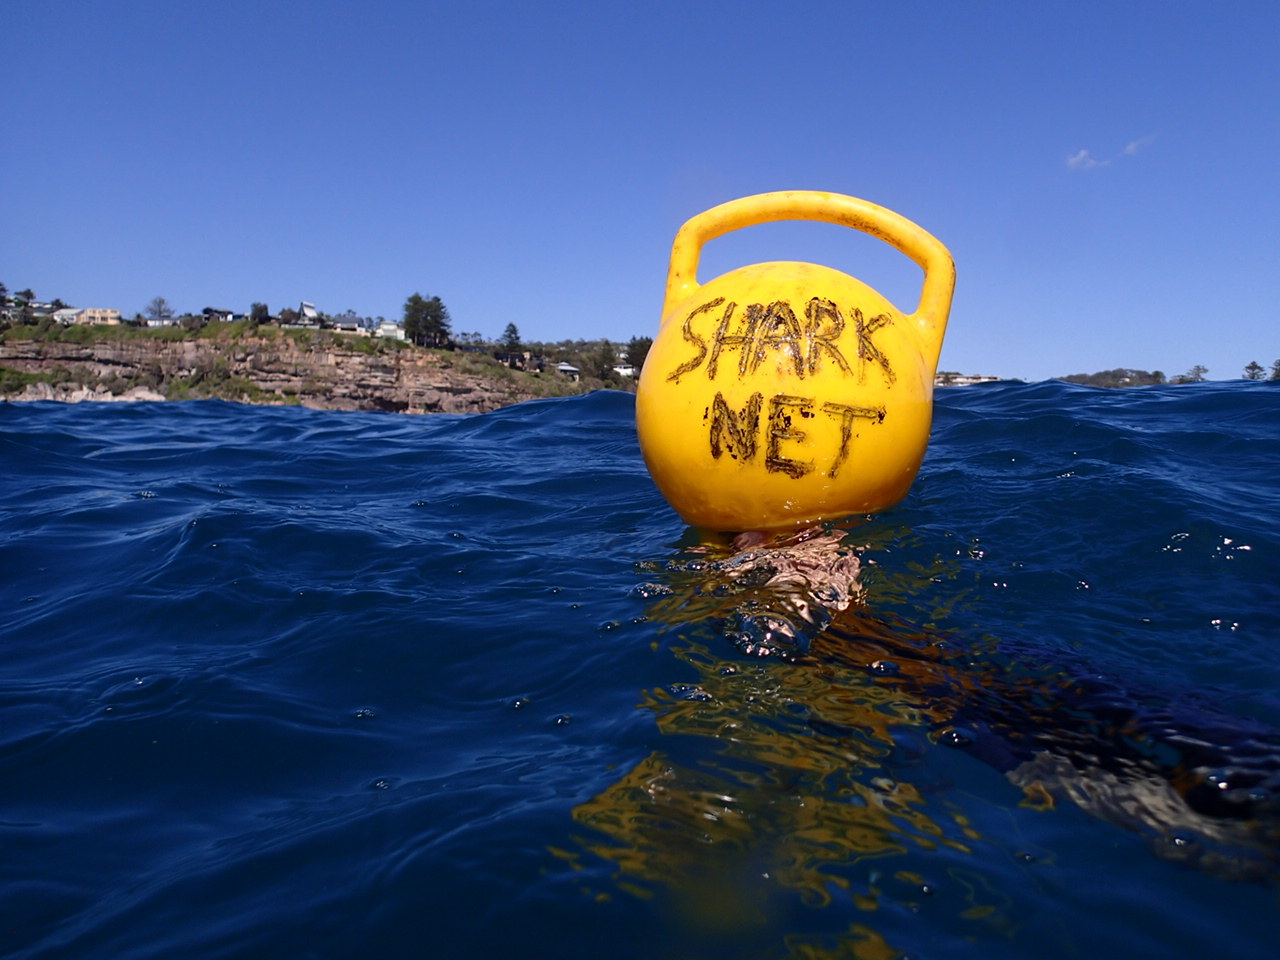 Over 90% of marine animals caught in NSW shark nets were non-target species